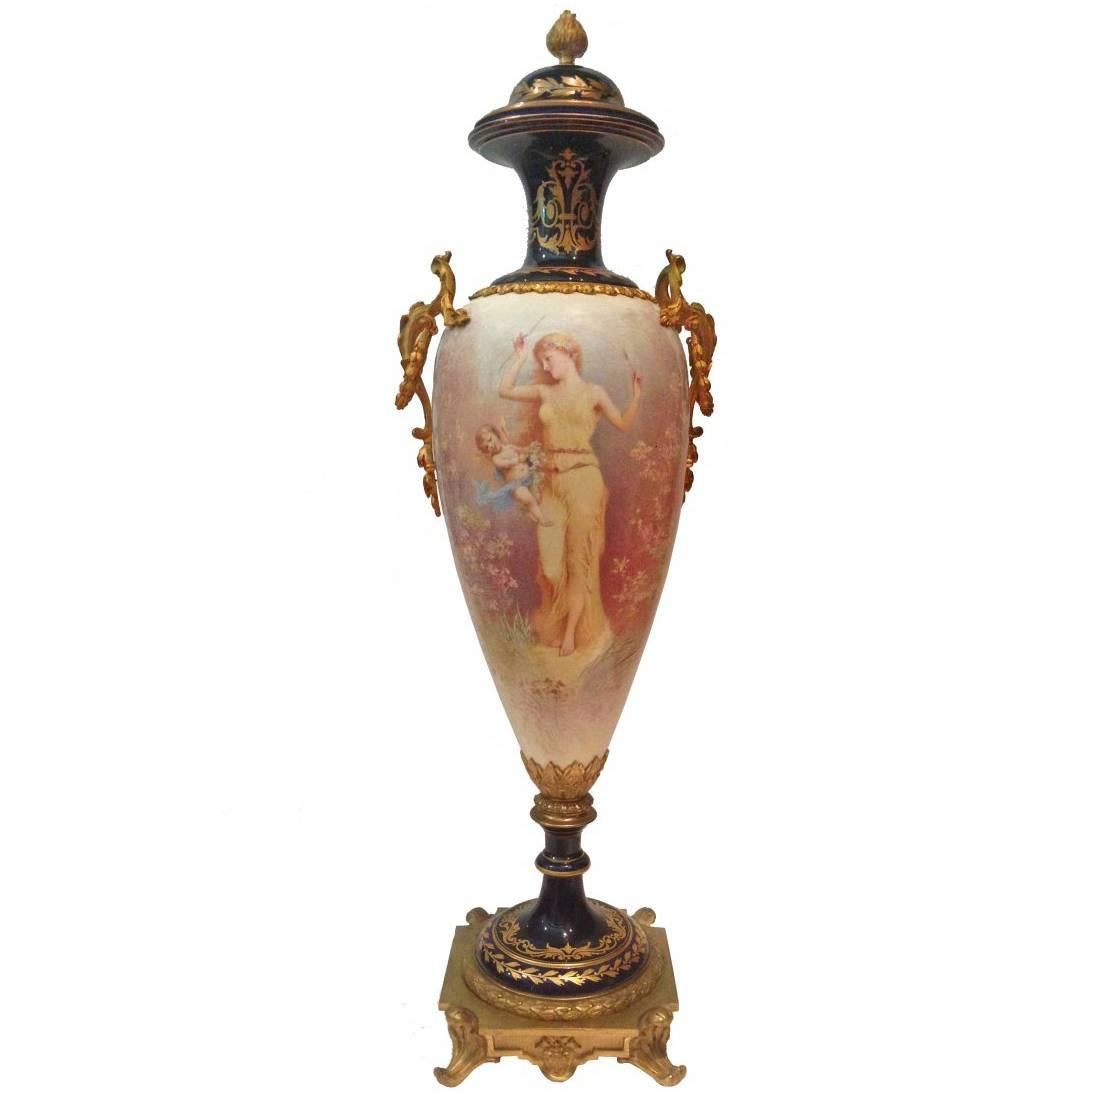  Sèvres Style Urn by C. La Barre 41", circa 1900 Monumental For Sale